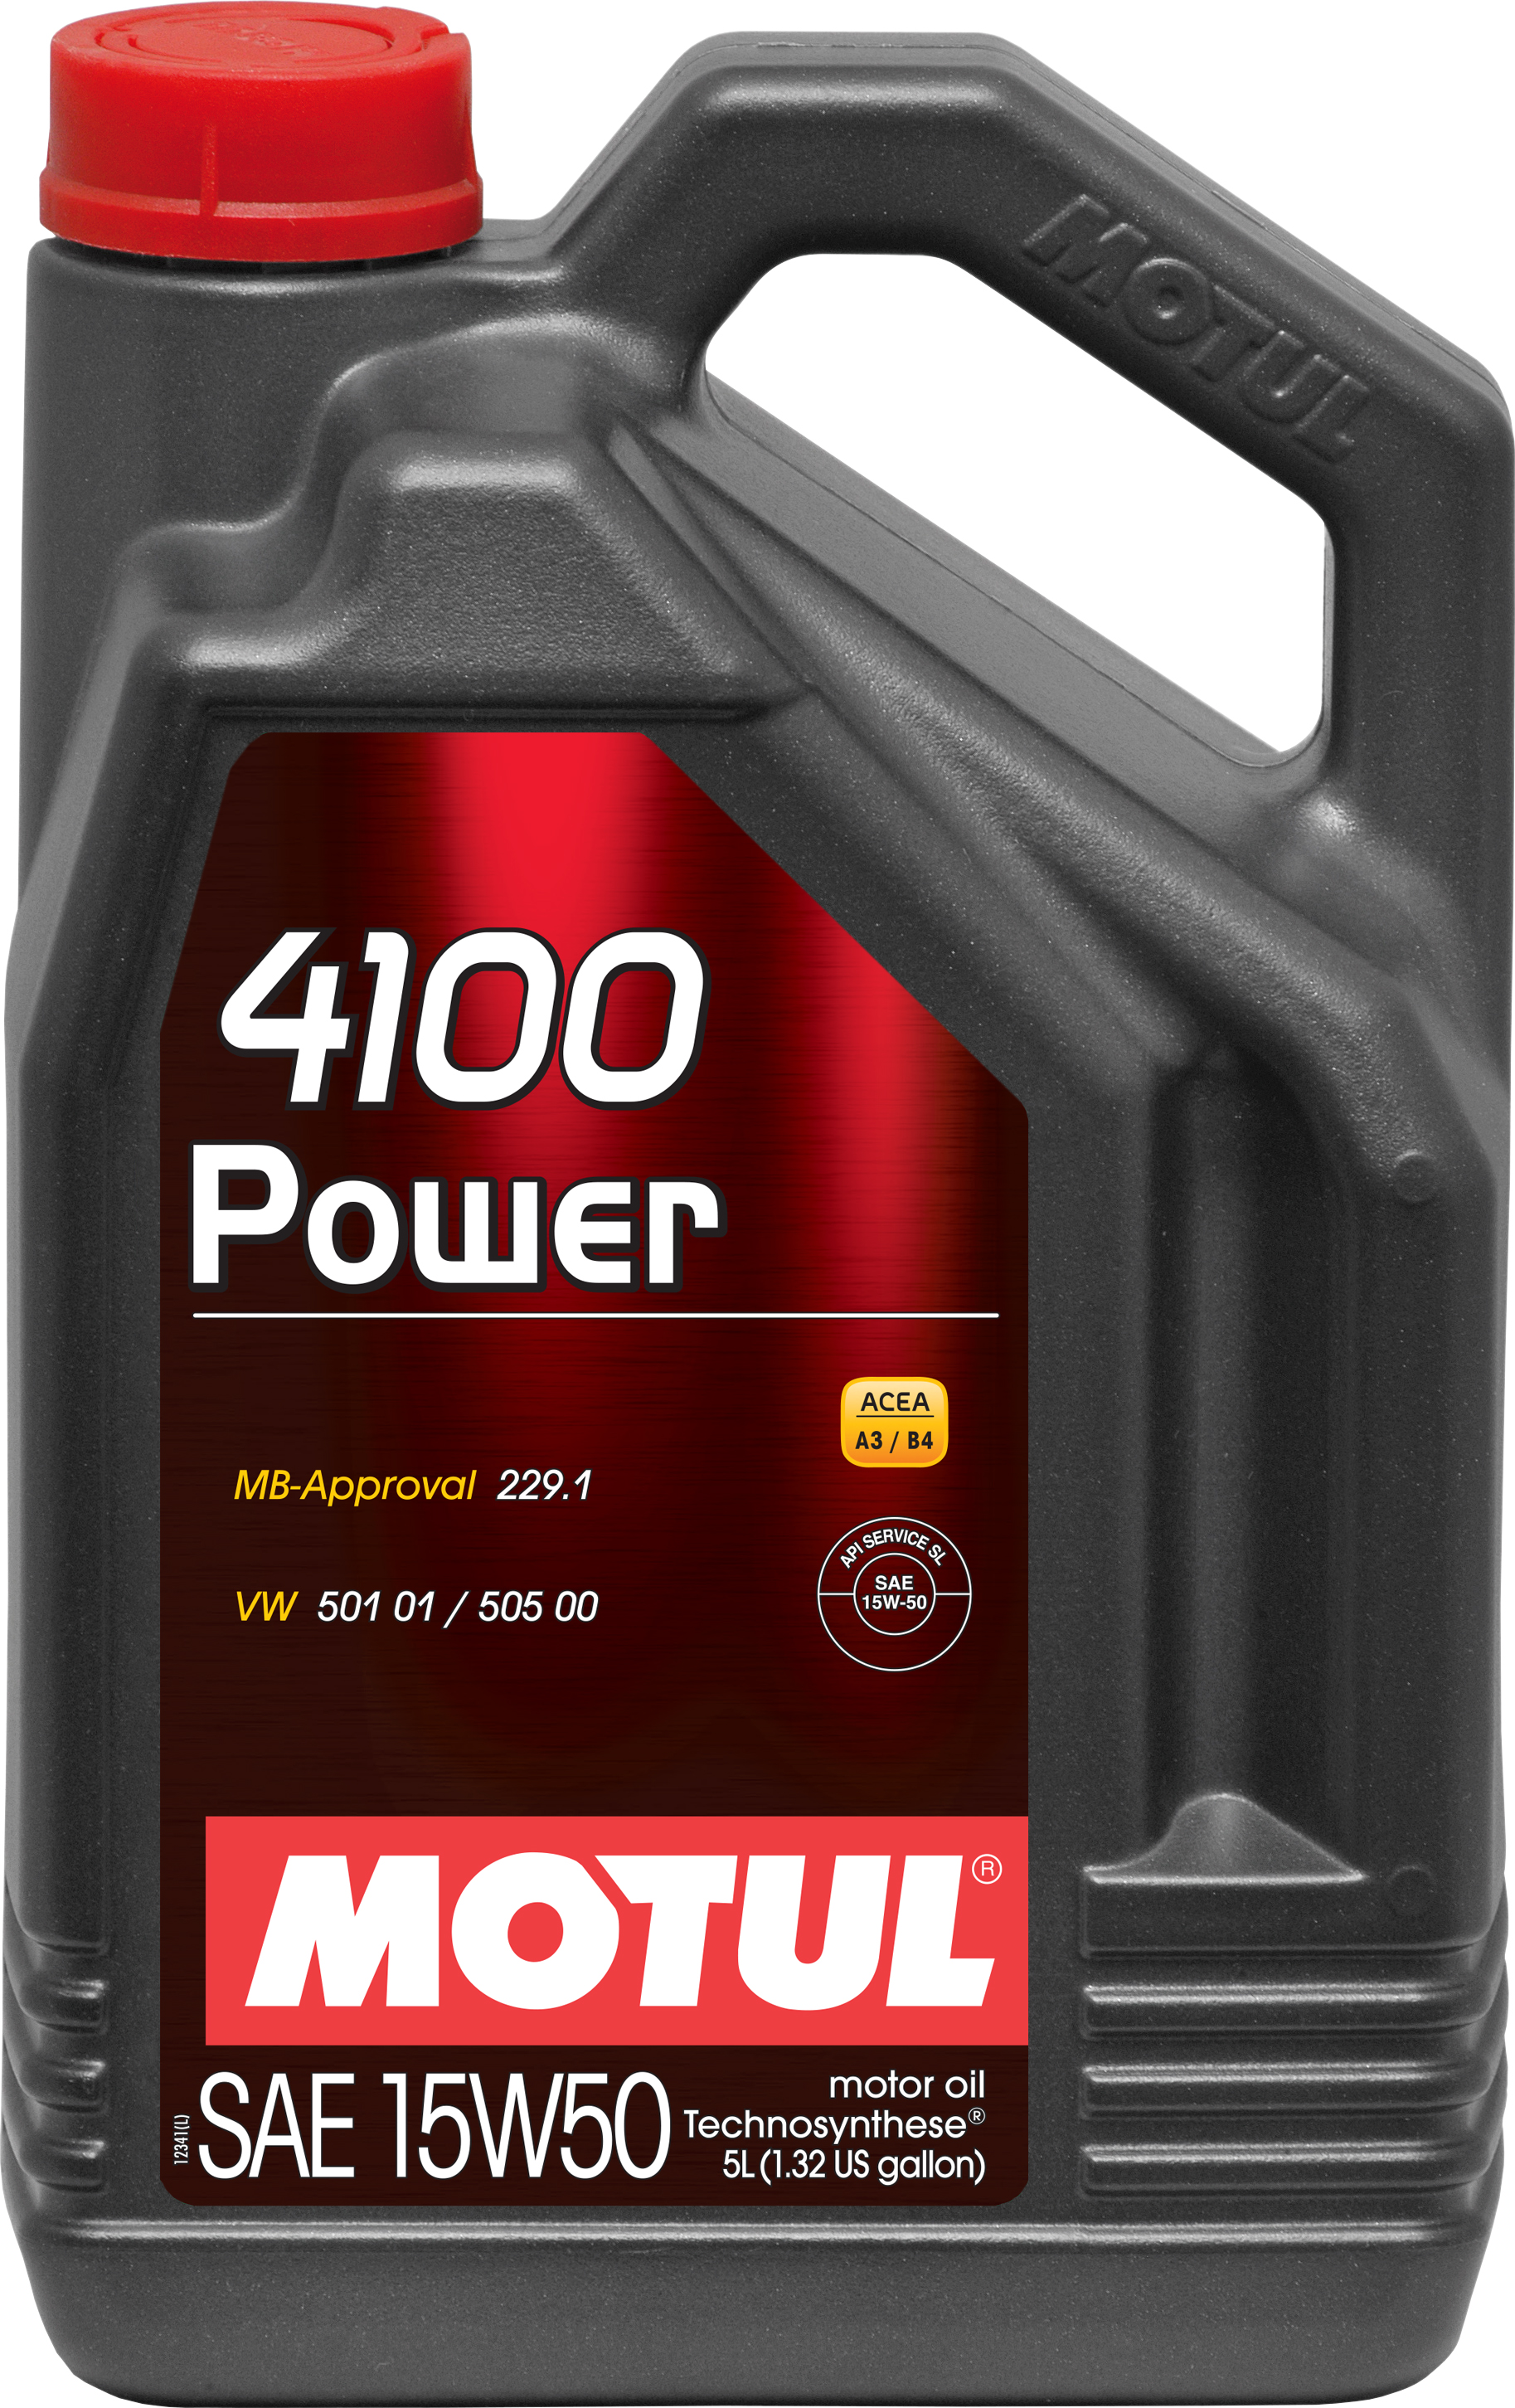 MOTUL 4100 POWER 15W50 - 5L - Technosynthese Oil